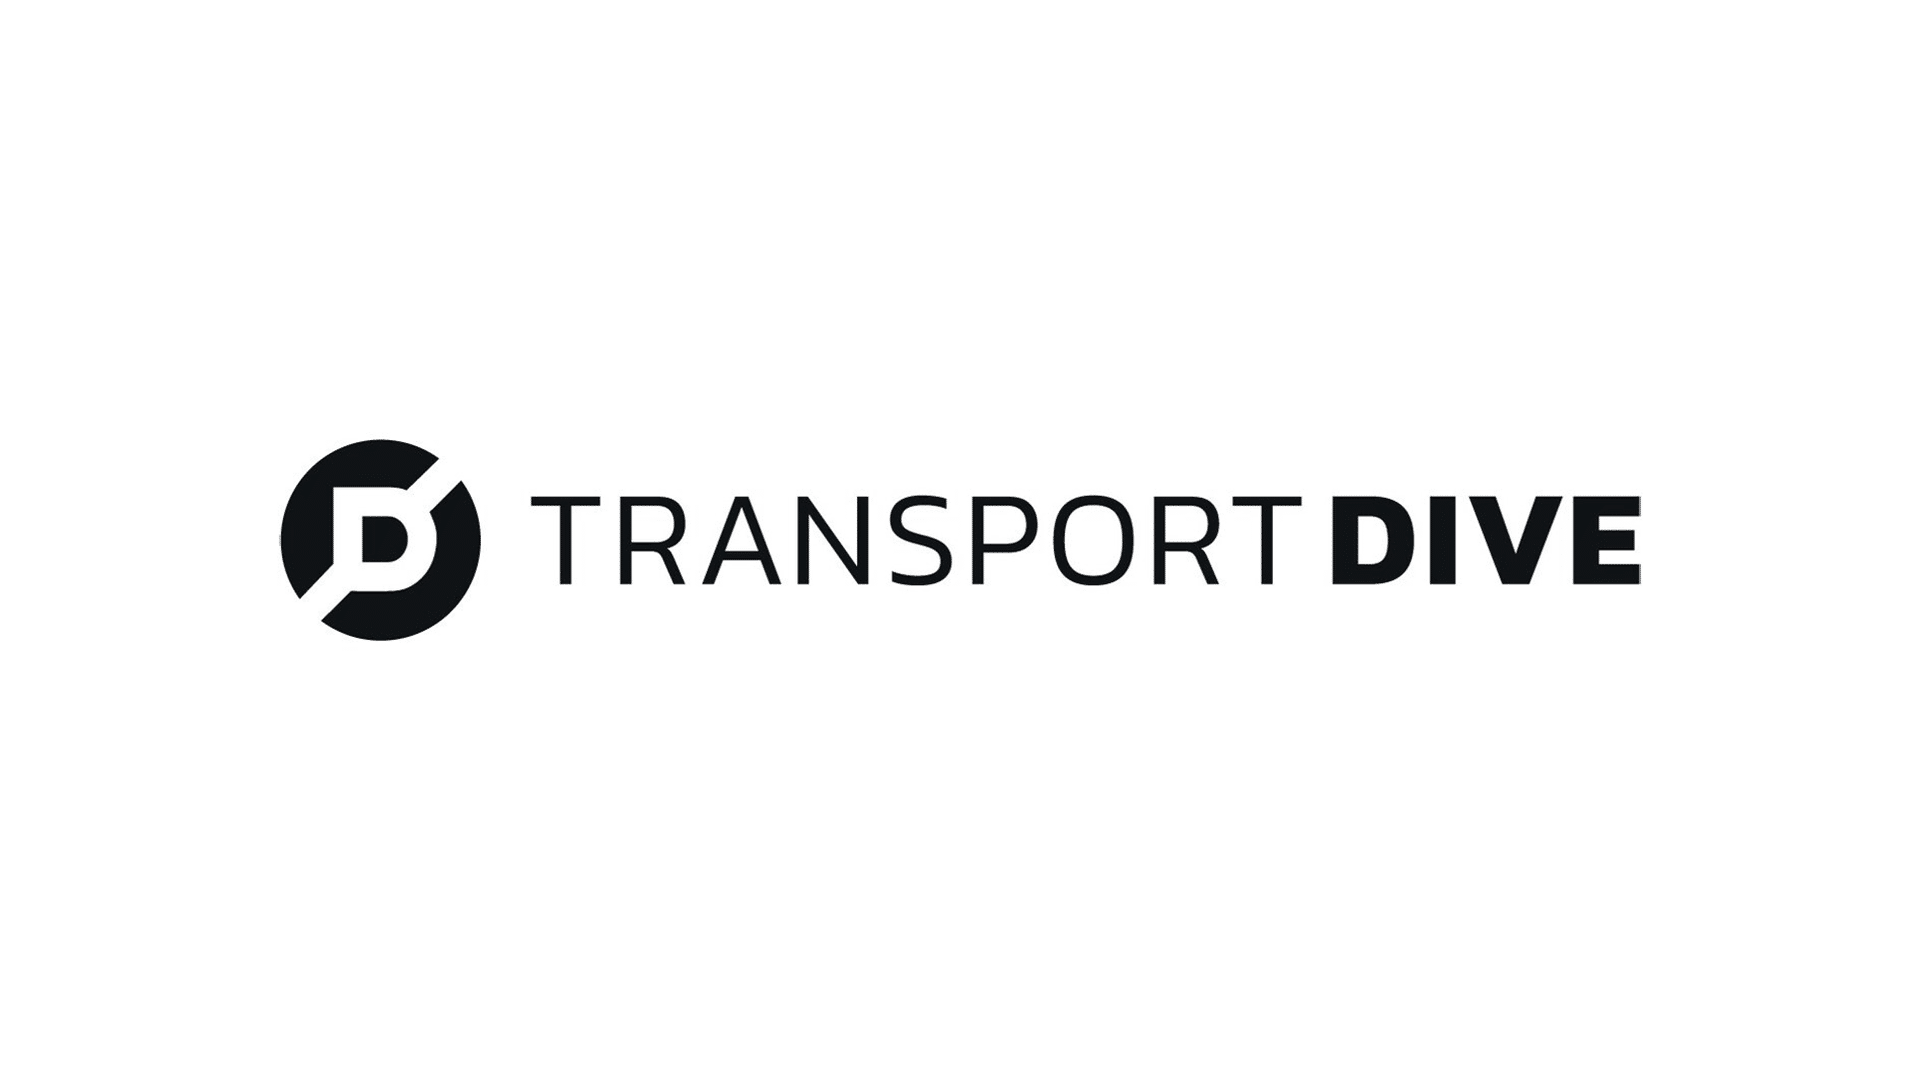 Transport Dive High Stakes Hemp Logistics Specialty Fleets and Drivers in High Demand Kevin Schultz President 357 Hemp Logistics